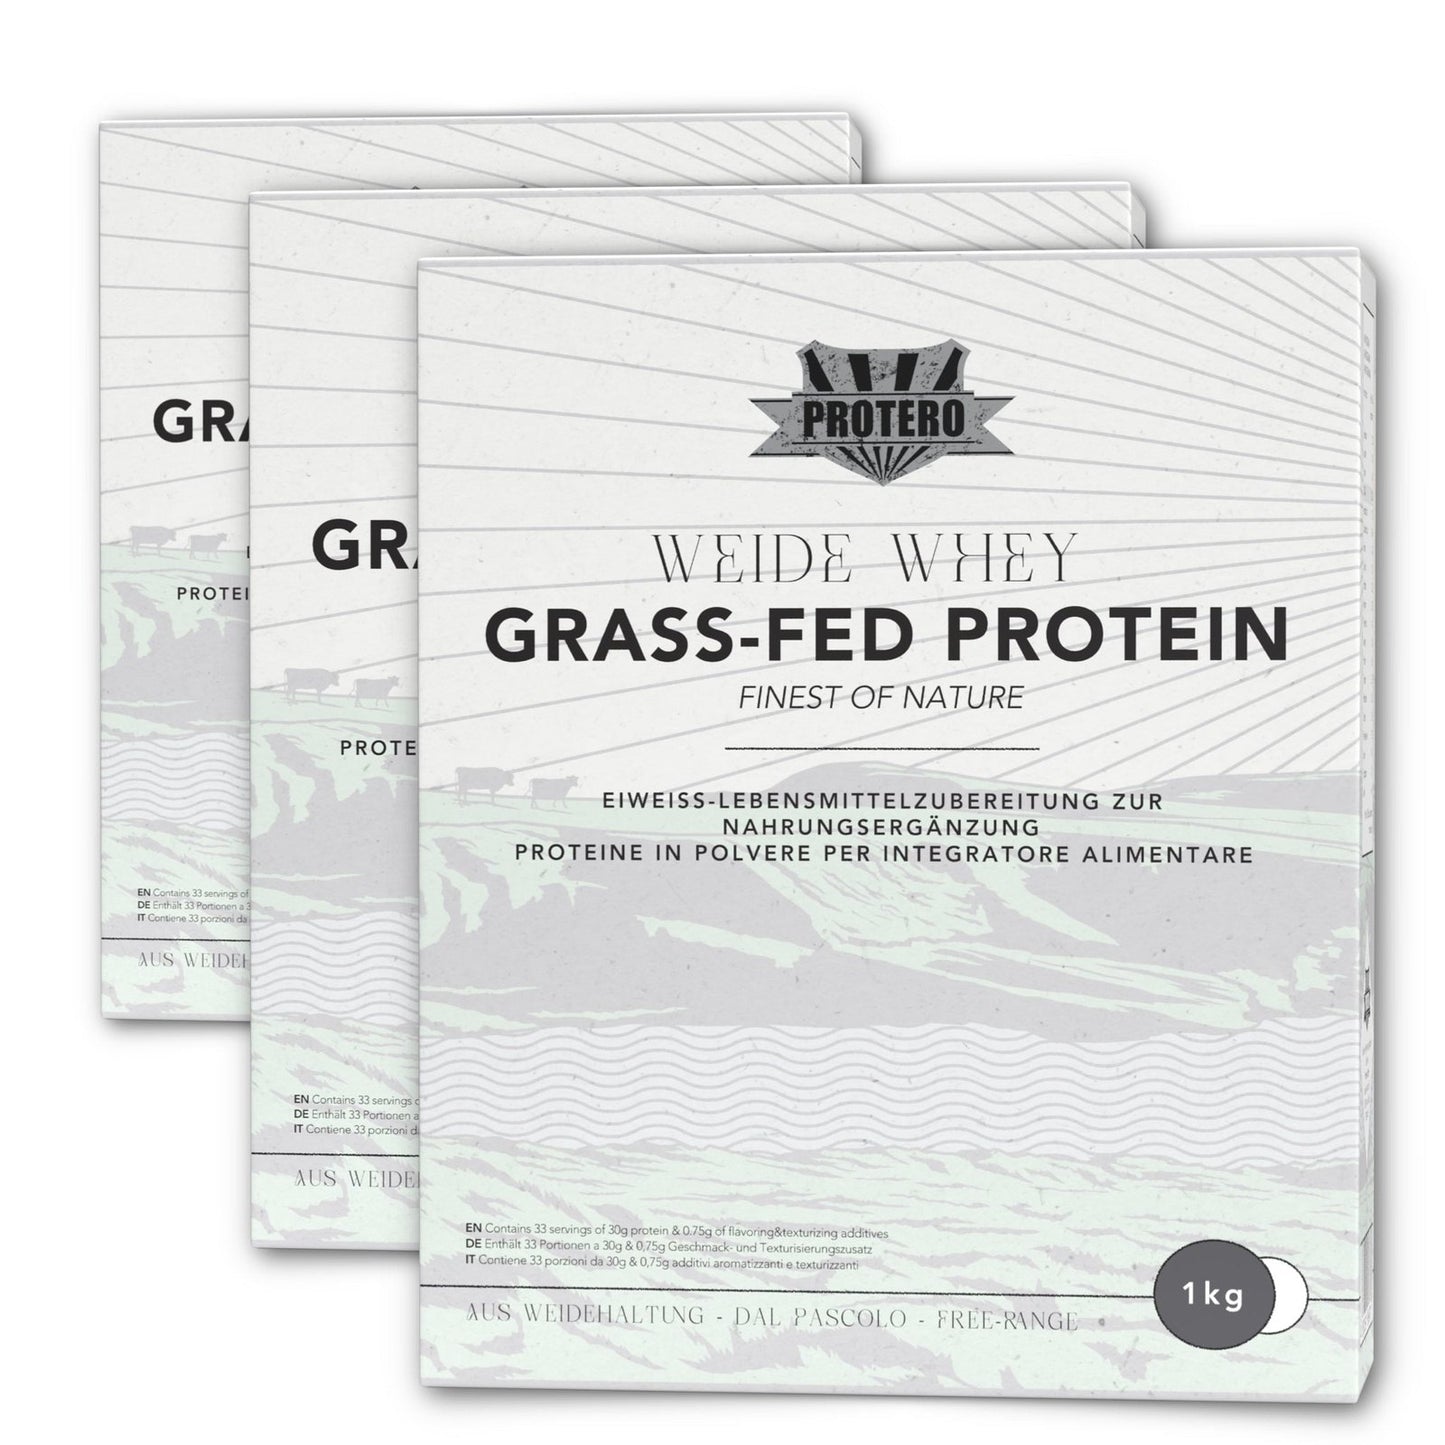 Weide Whey Protein - Grass-fed